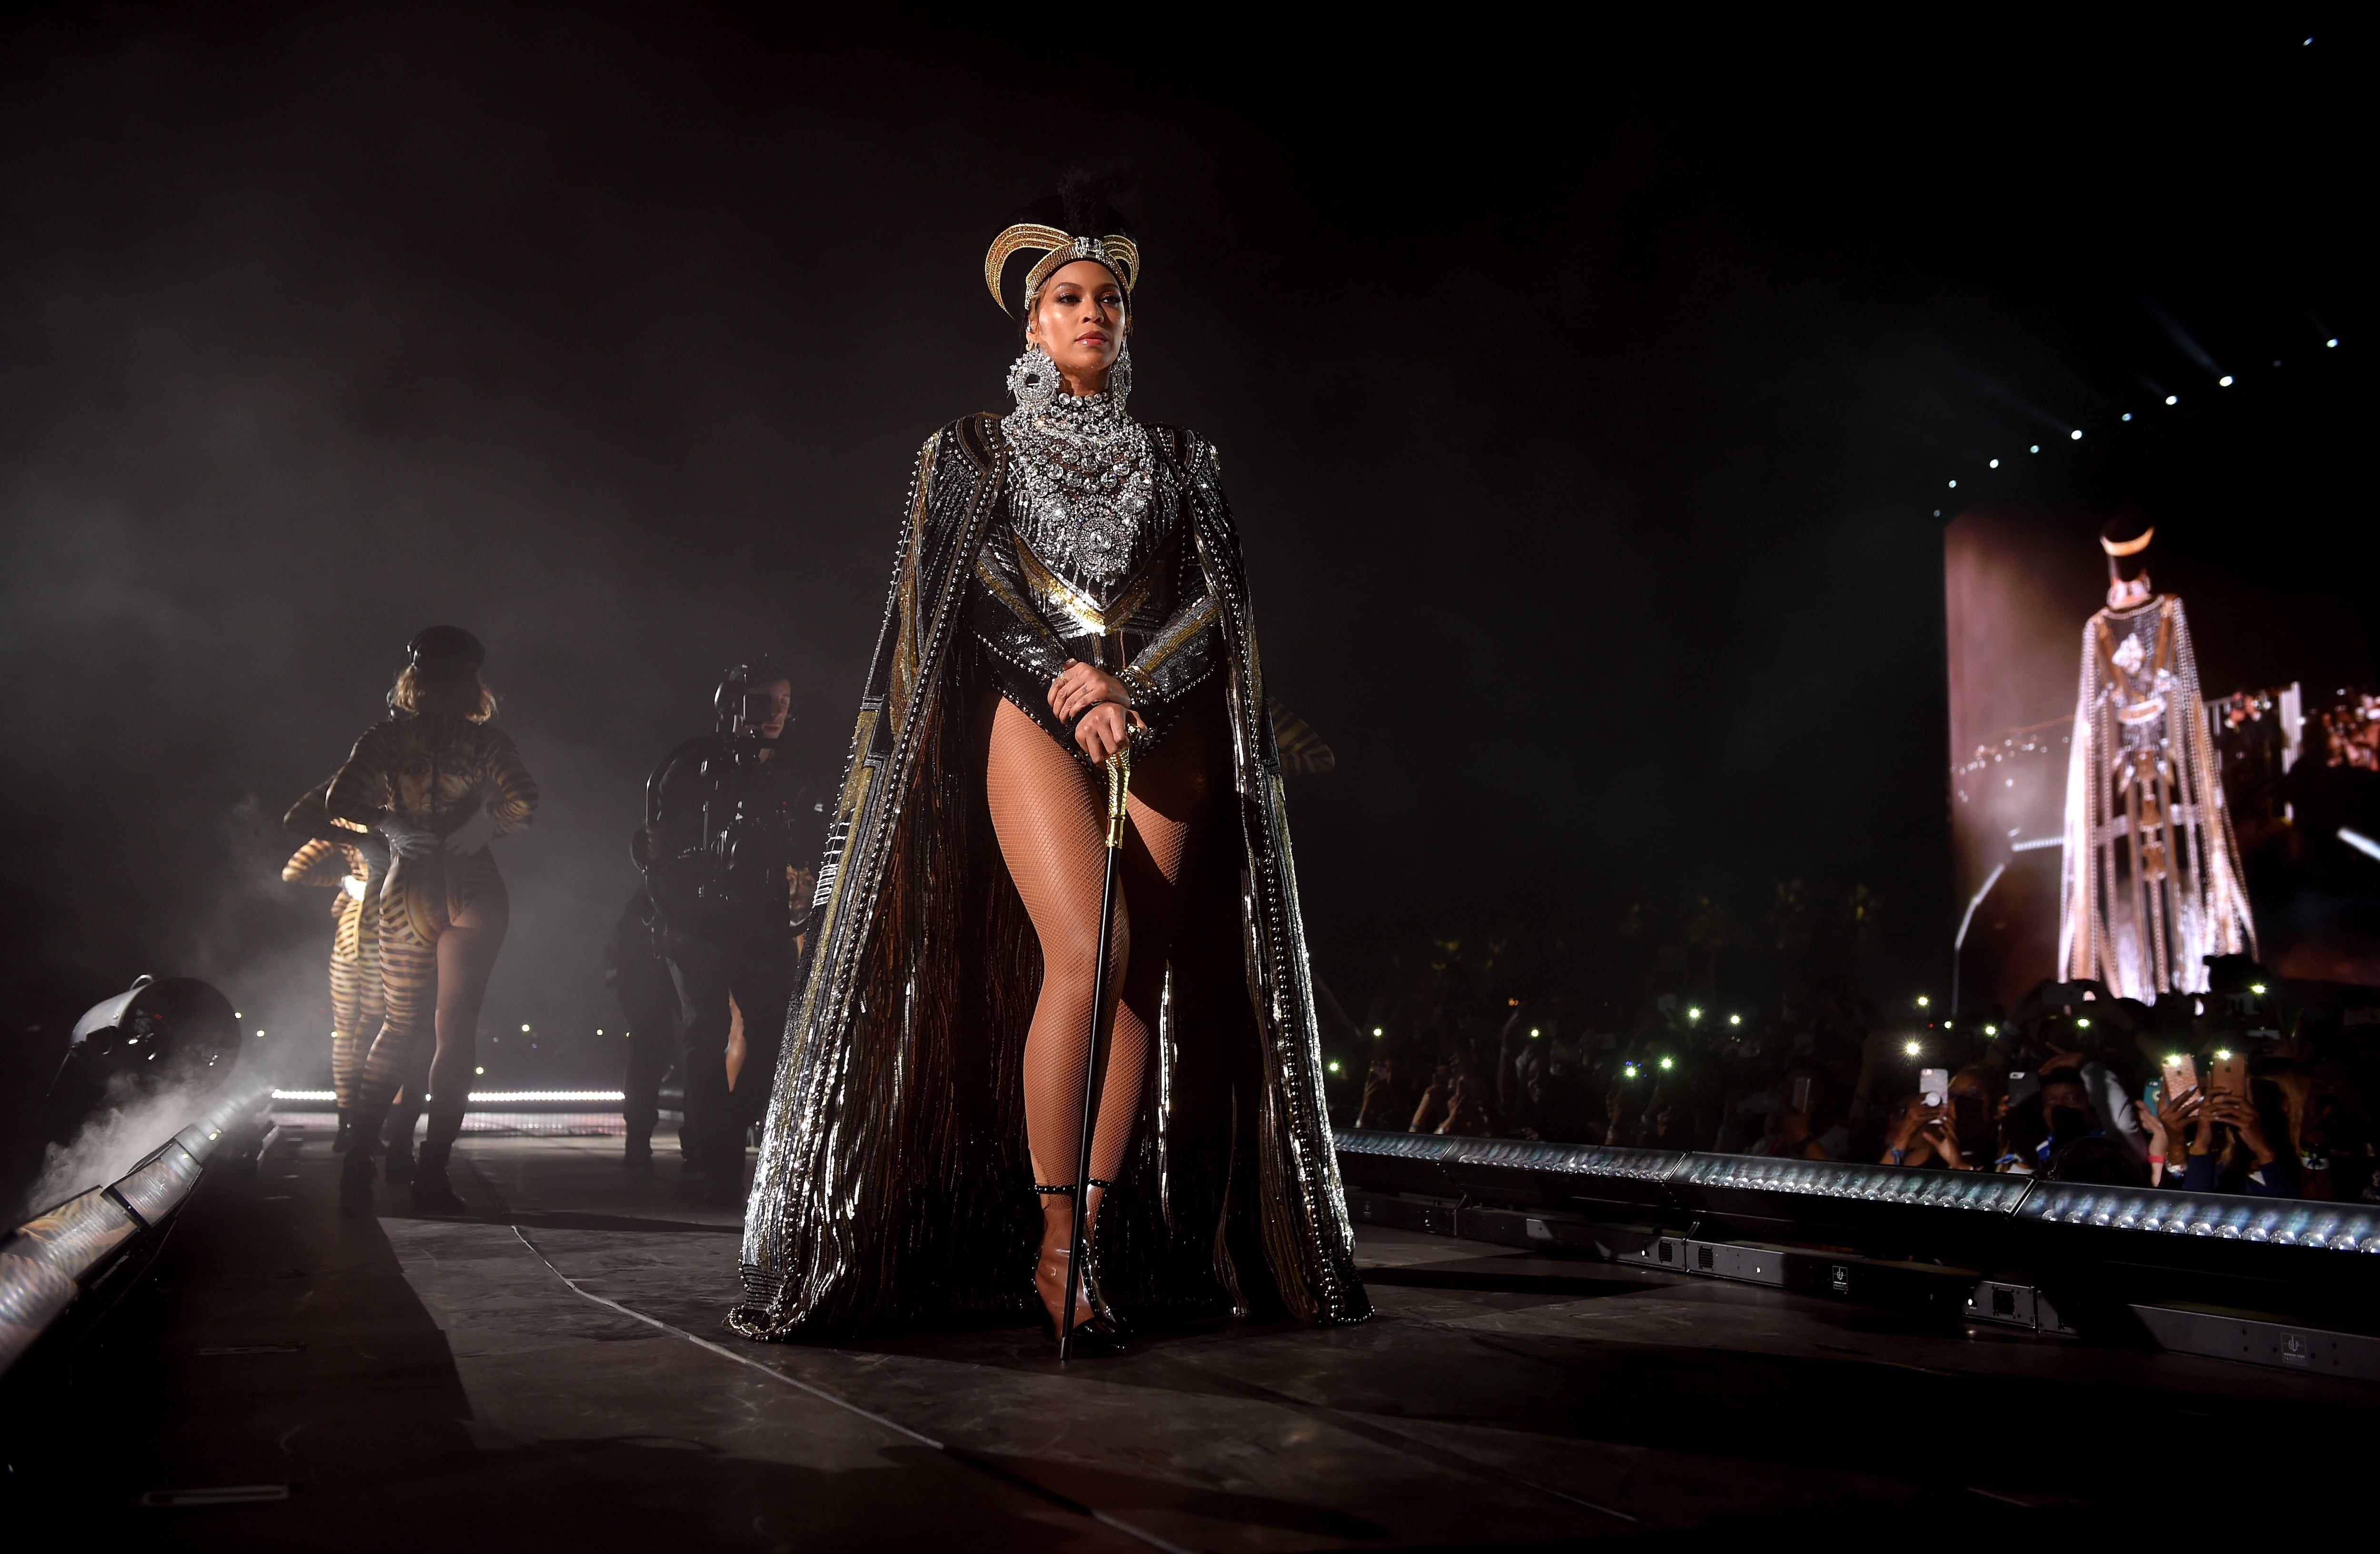 Singer Beyoncé dressed as Nefertiti at the 2018 Coachella Festival in Indio, California.